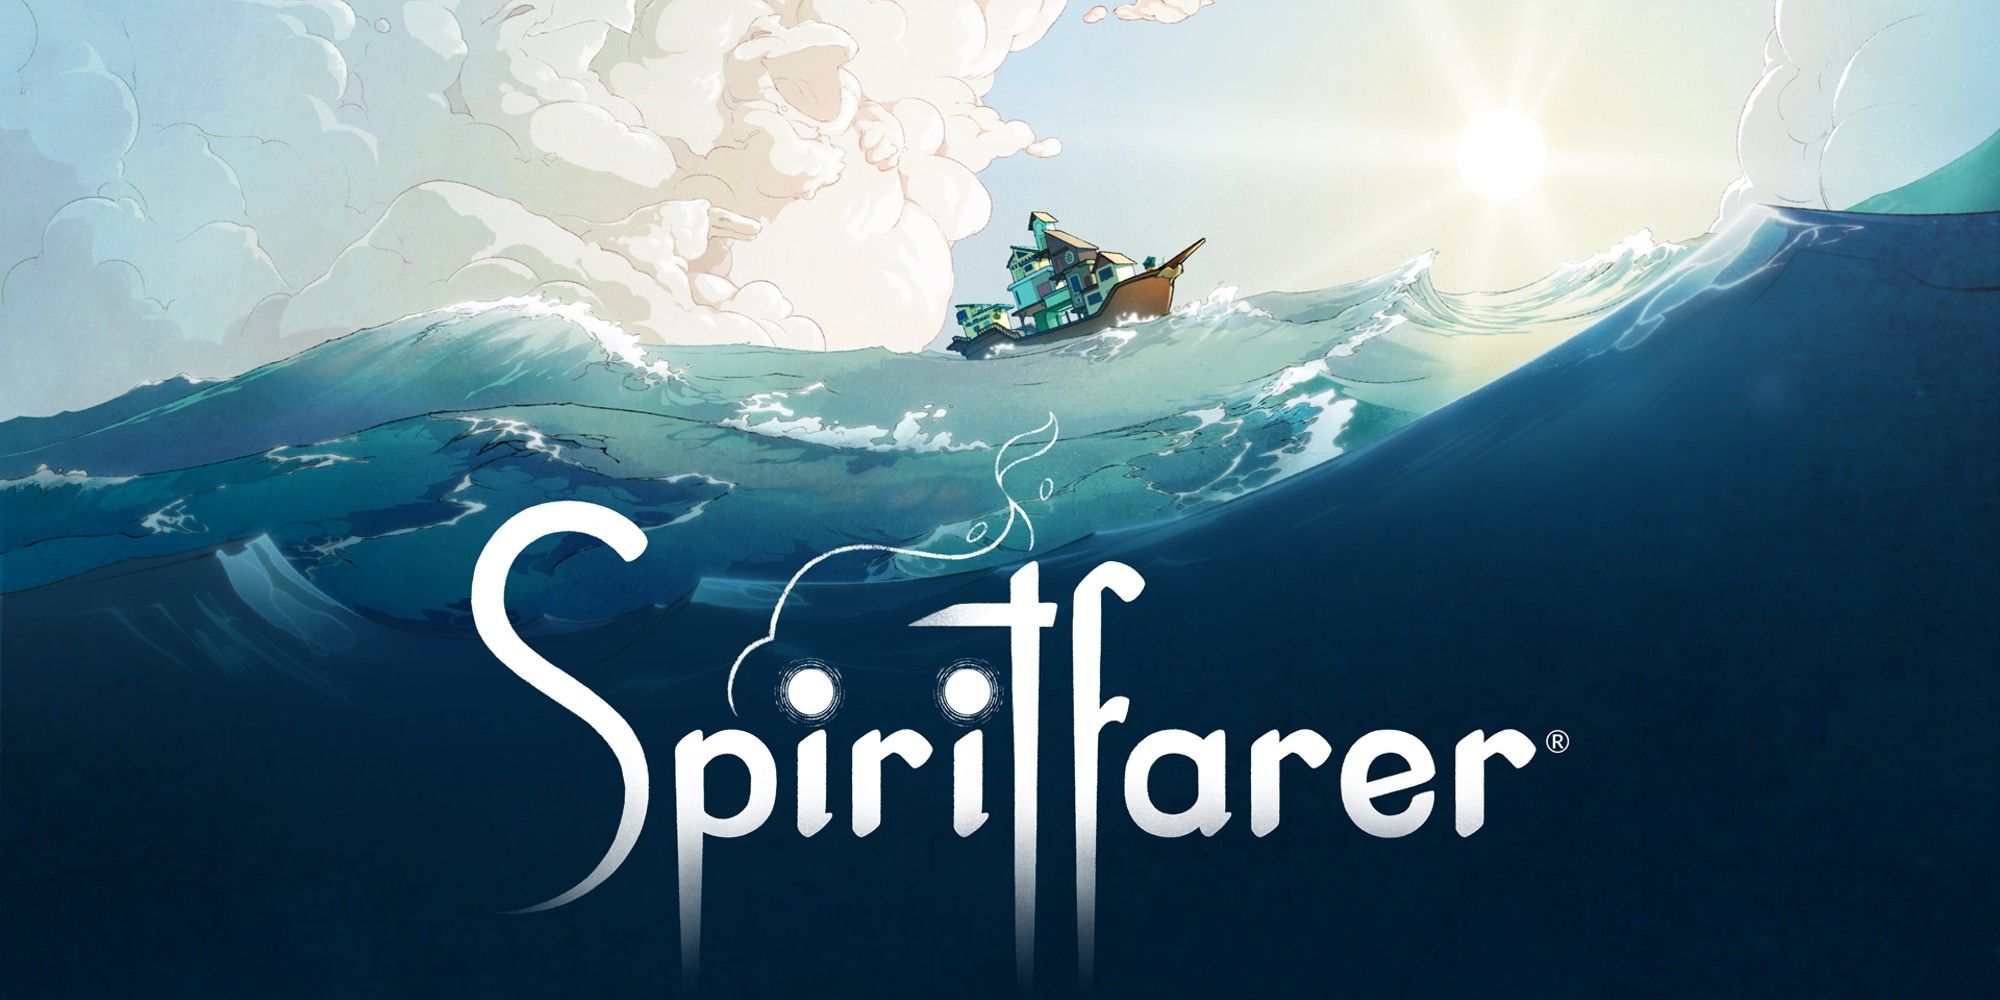 official art for spiritfarer, with ship sailing in ocean